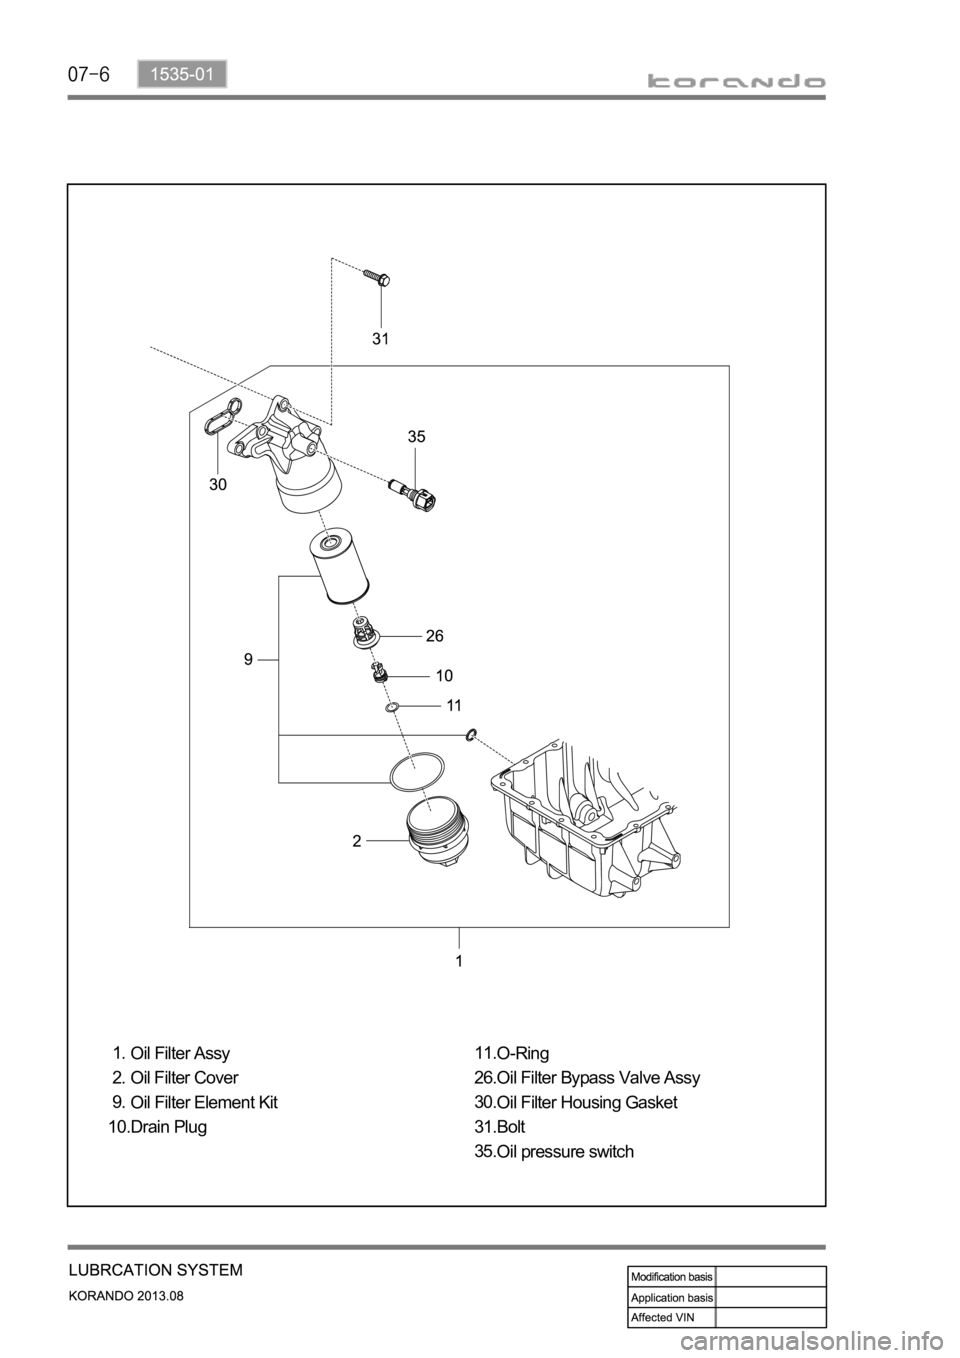 SSANGYONG KORANDO 2013  Service Manual Oil Filter Assy
Oil Filter Cover
Oil Filter Element Kit
Drain Plug 1.
2.
9.
10.O-Ring
Oil Filter Bypass Valve Assy
Oil Filter Housing Gasket
Bolt
Oil pressure switch 11.
26.
30.
31.
35. 